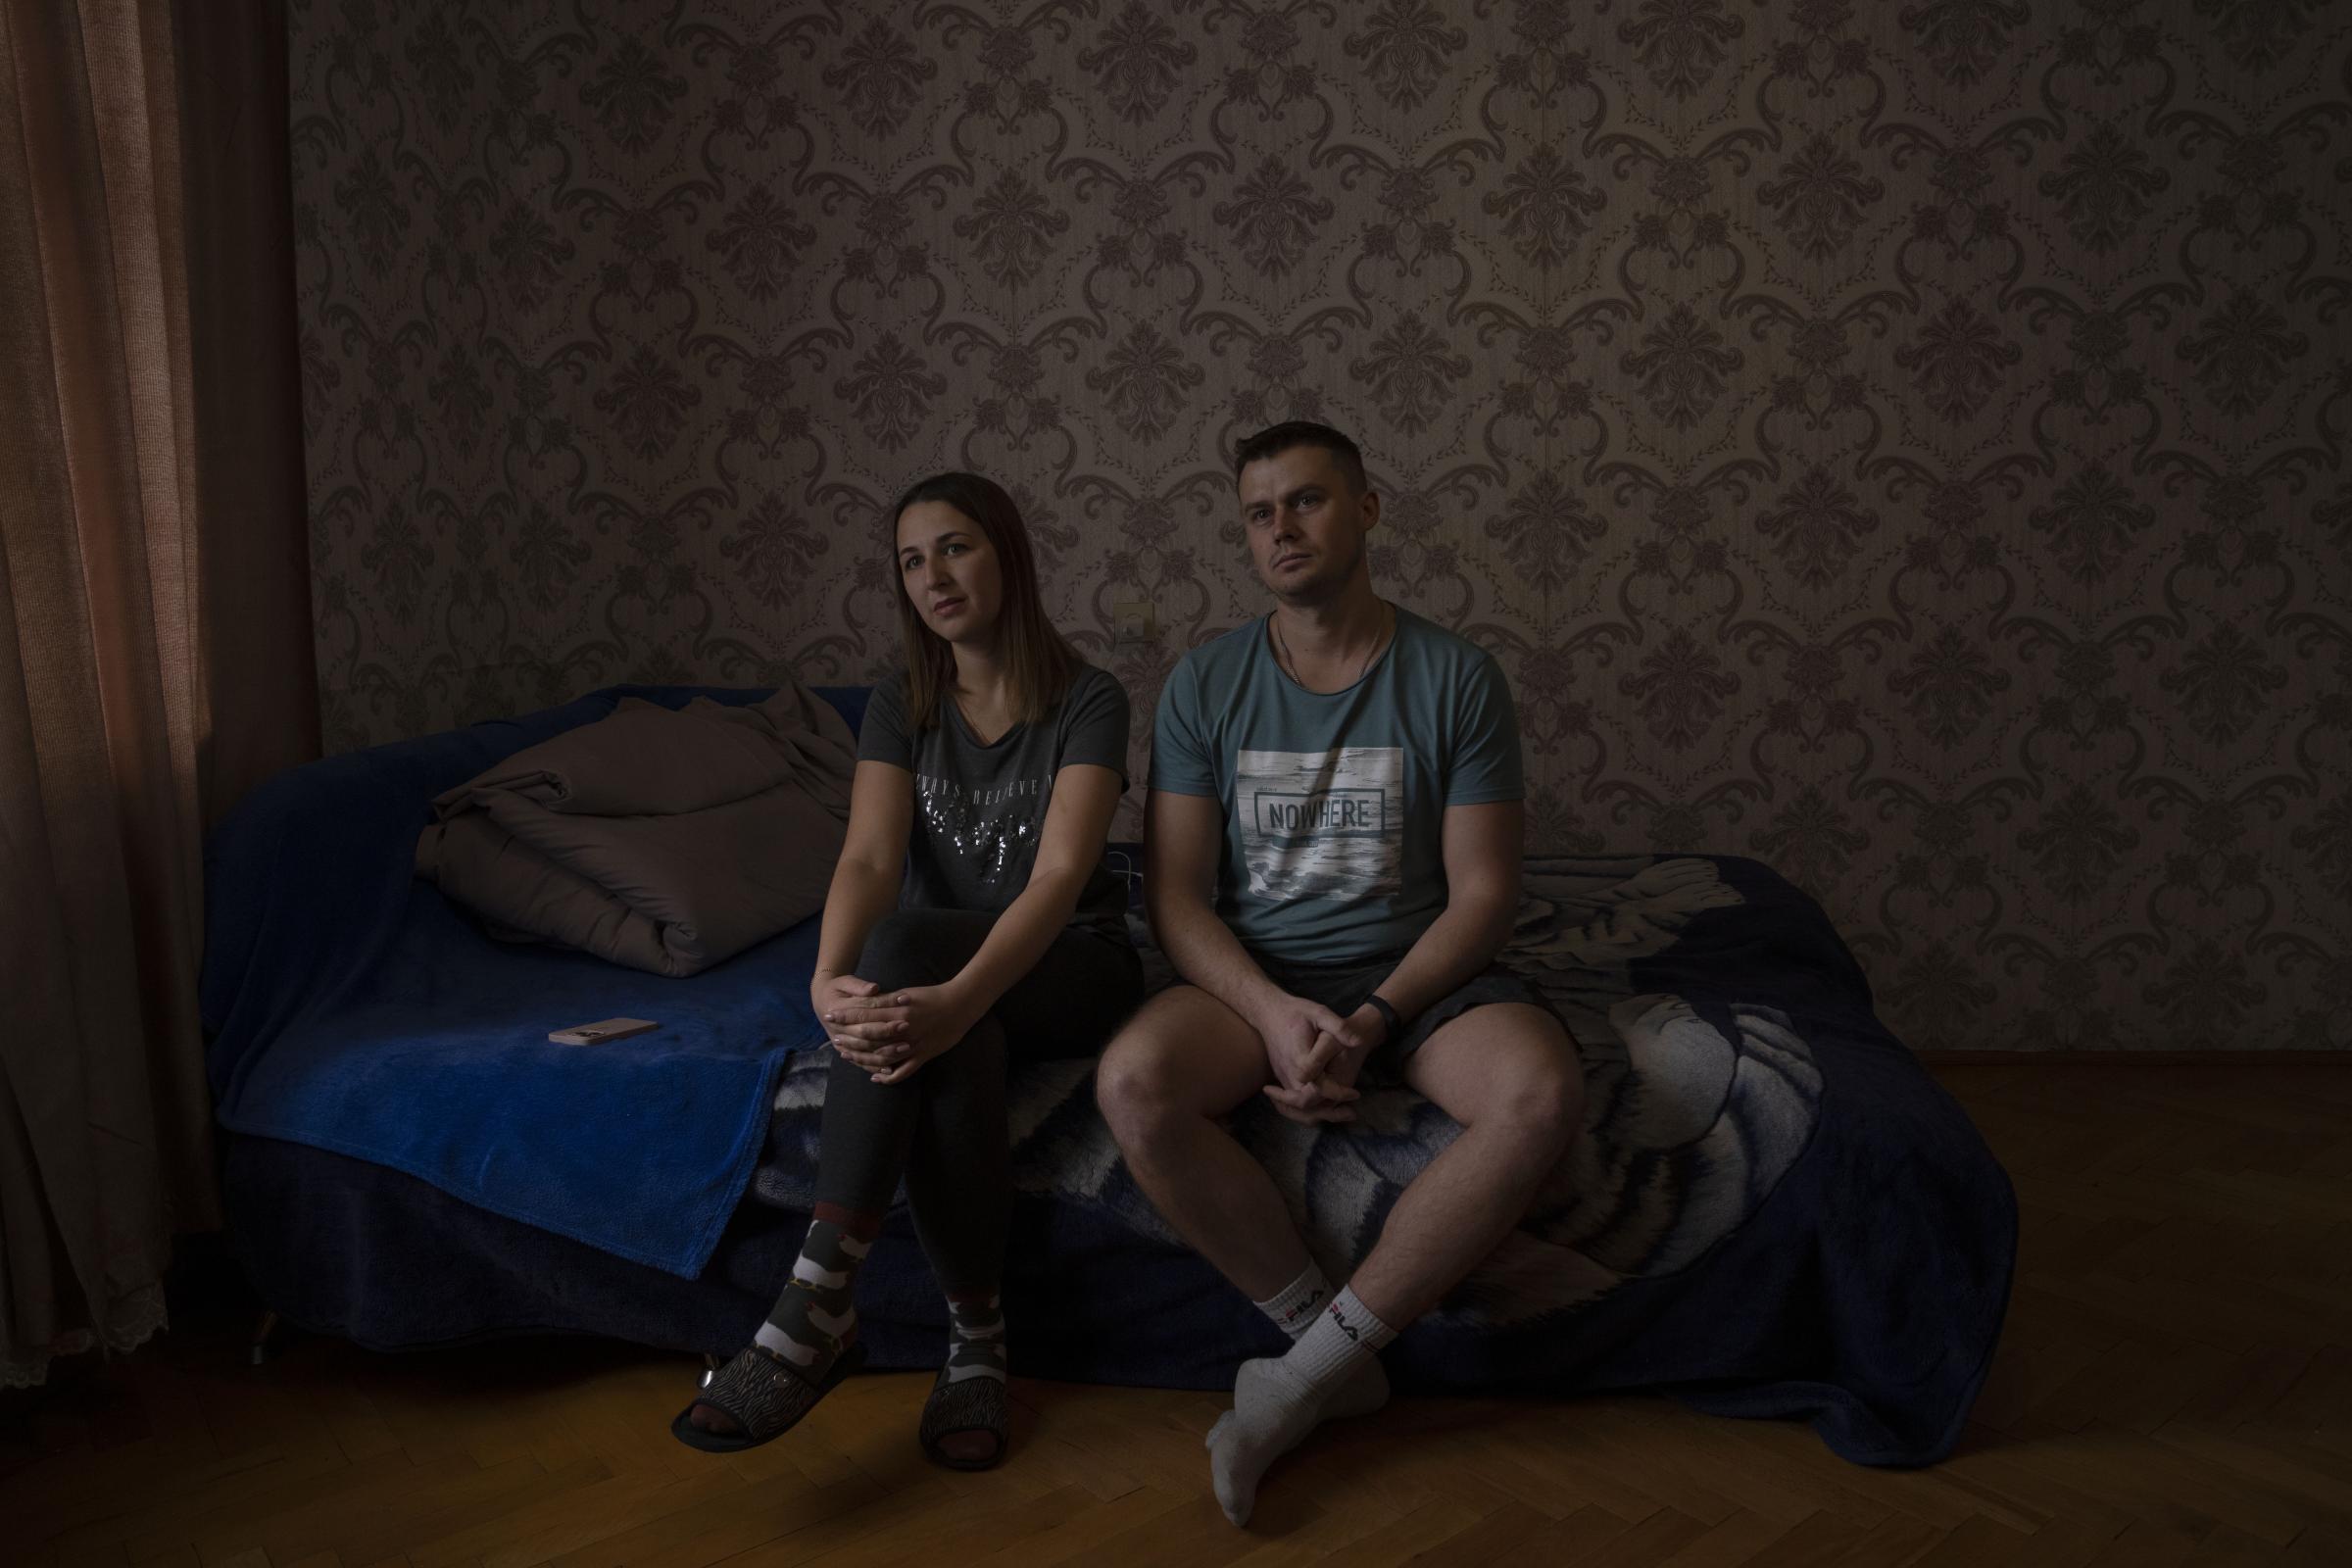 Stories of Ukraine's families during war - Olya Shlapak, and her husband Sasha Olexandre, recount...